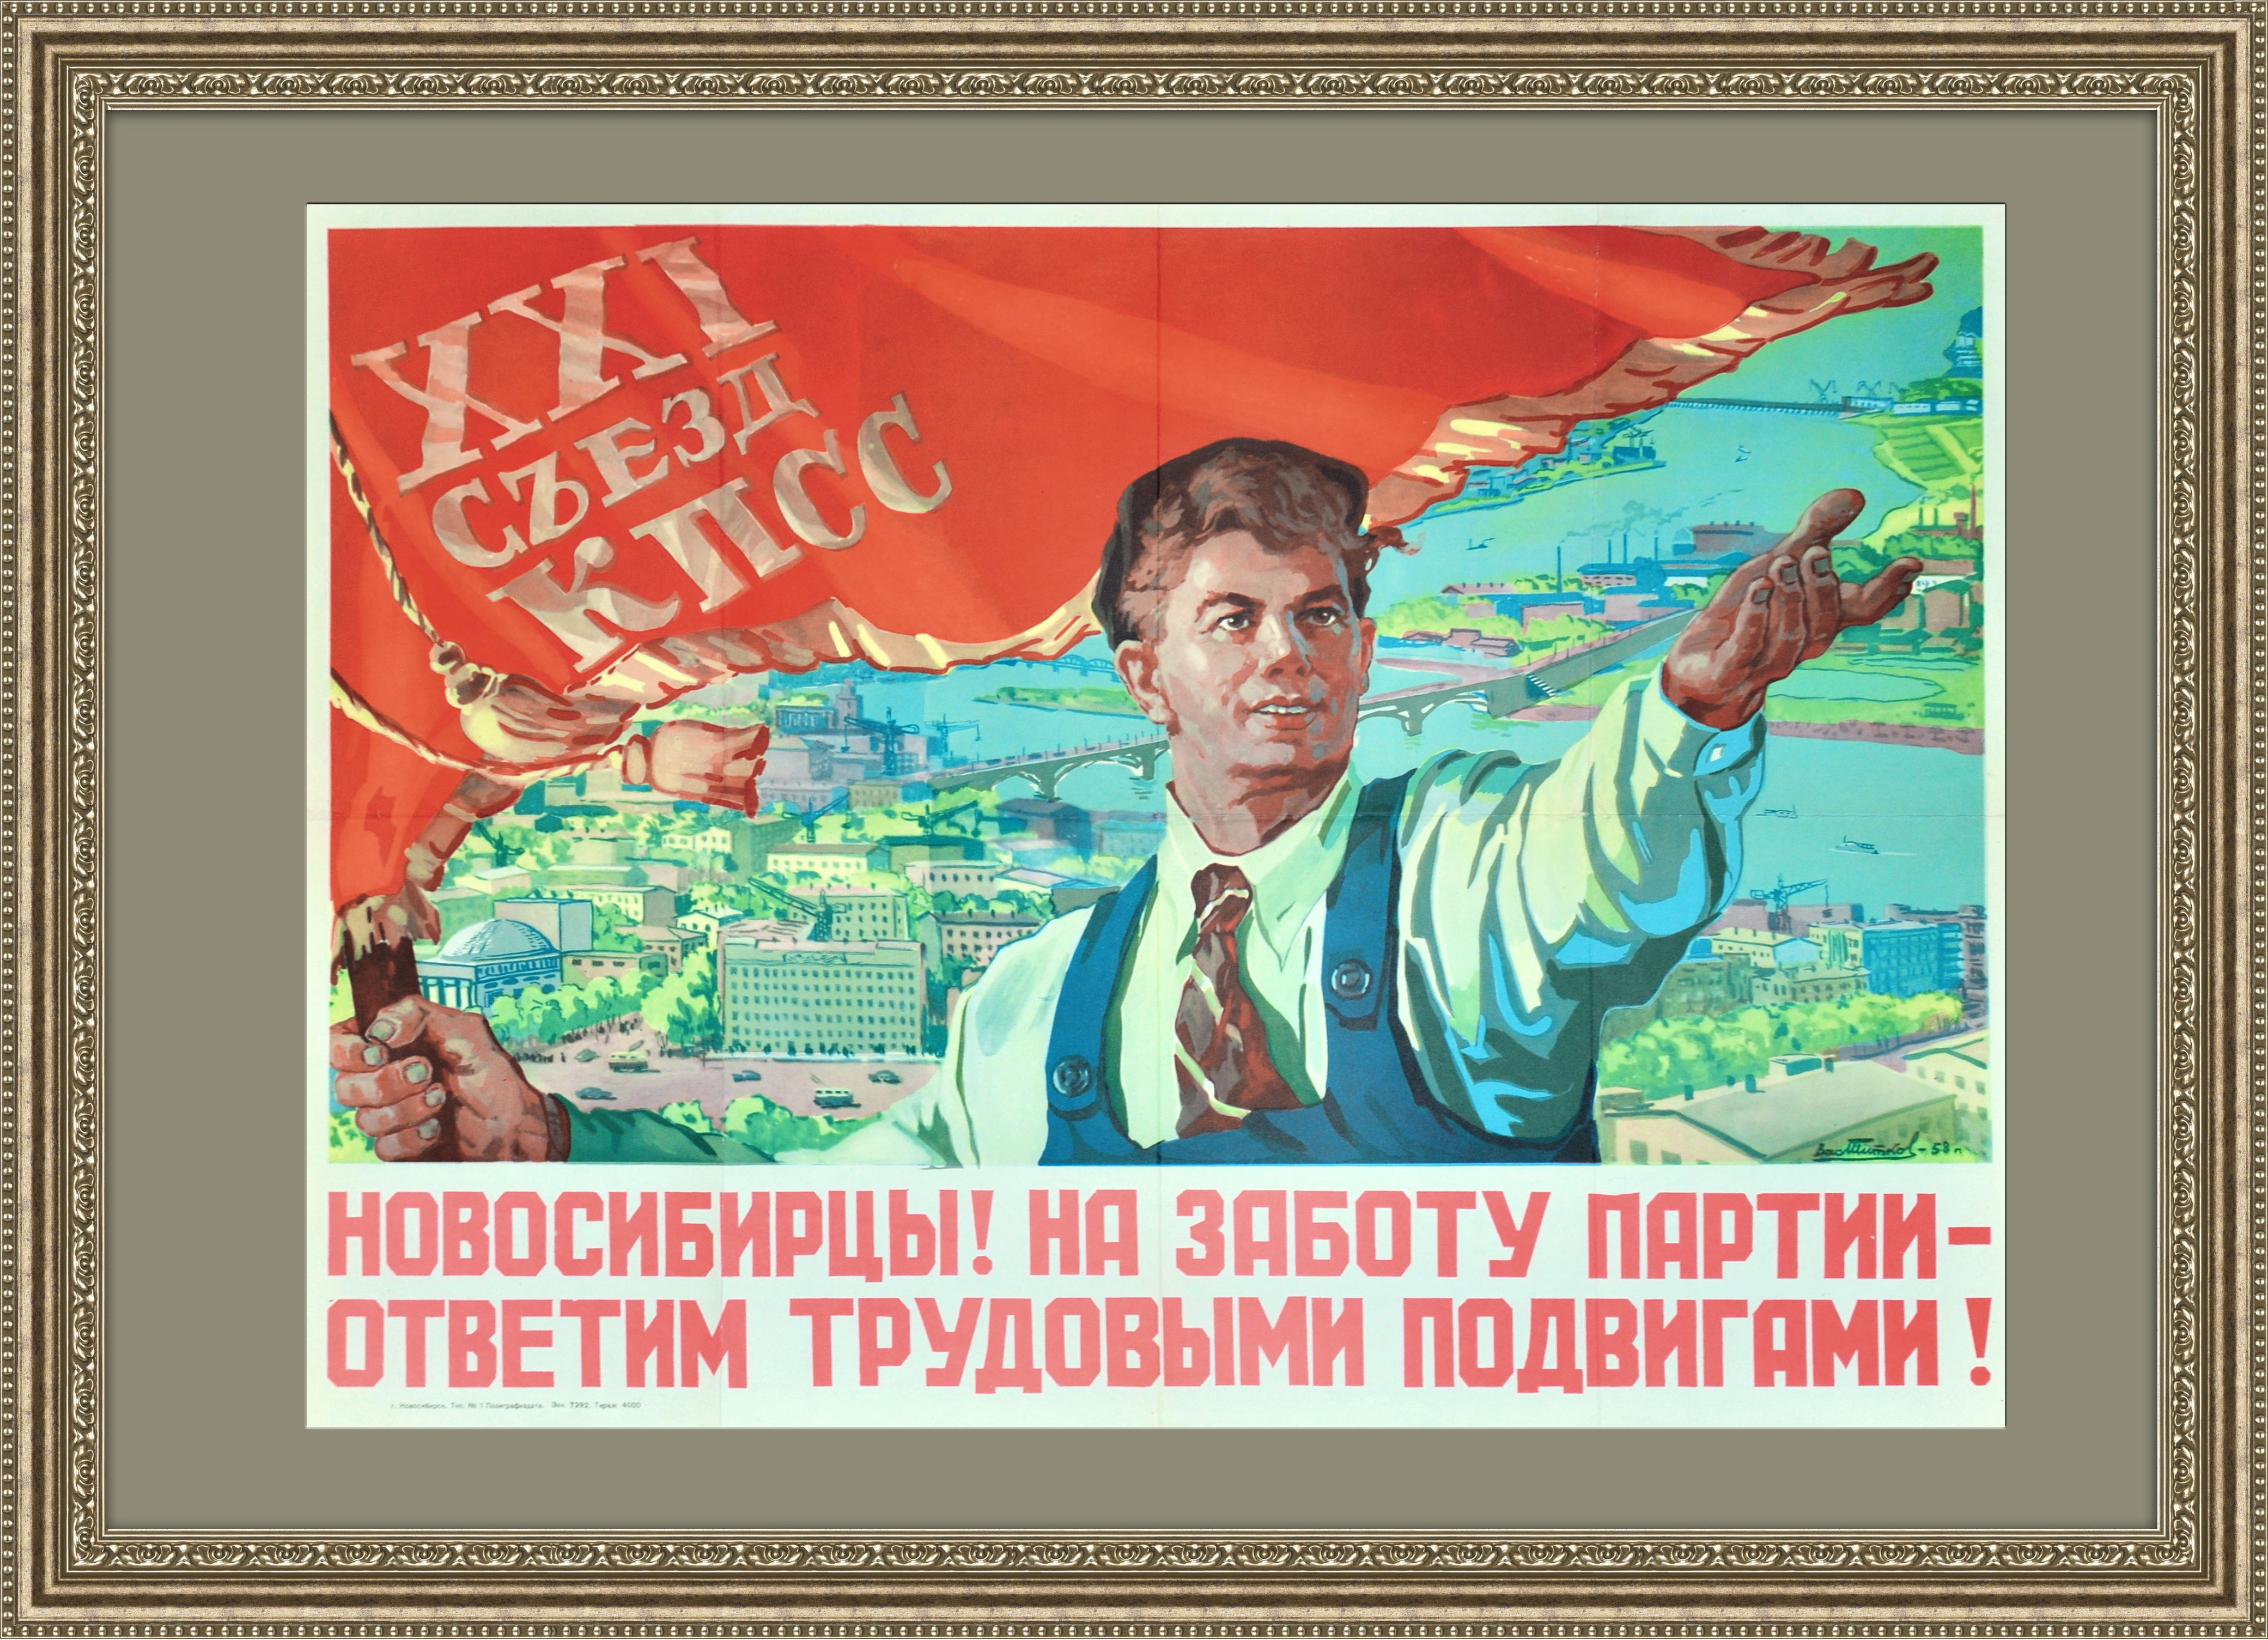 В каком году был создан плакат. Советские плакаты. Плакаты советских лет. Советские агитационные плакаты. Советские мирные плакаты.